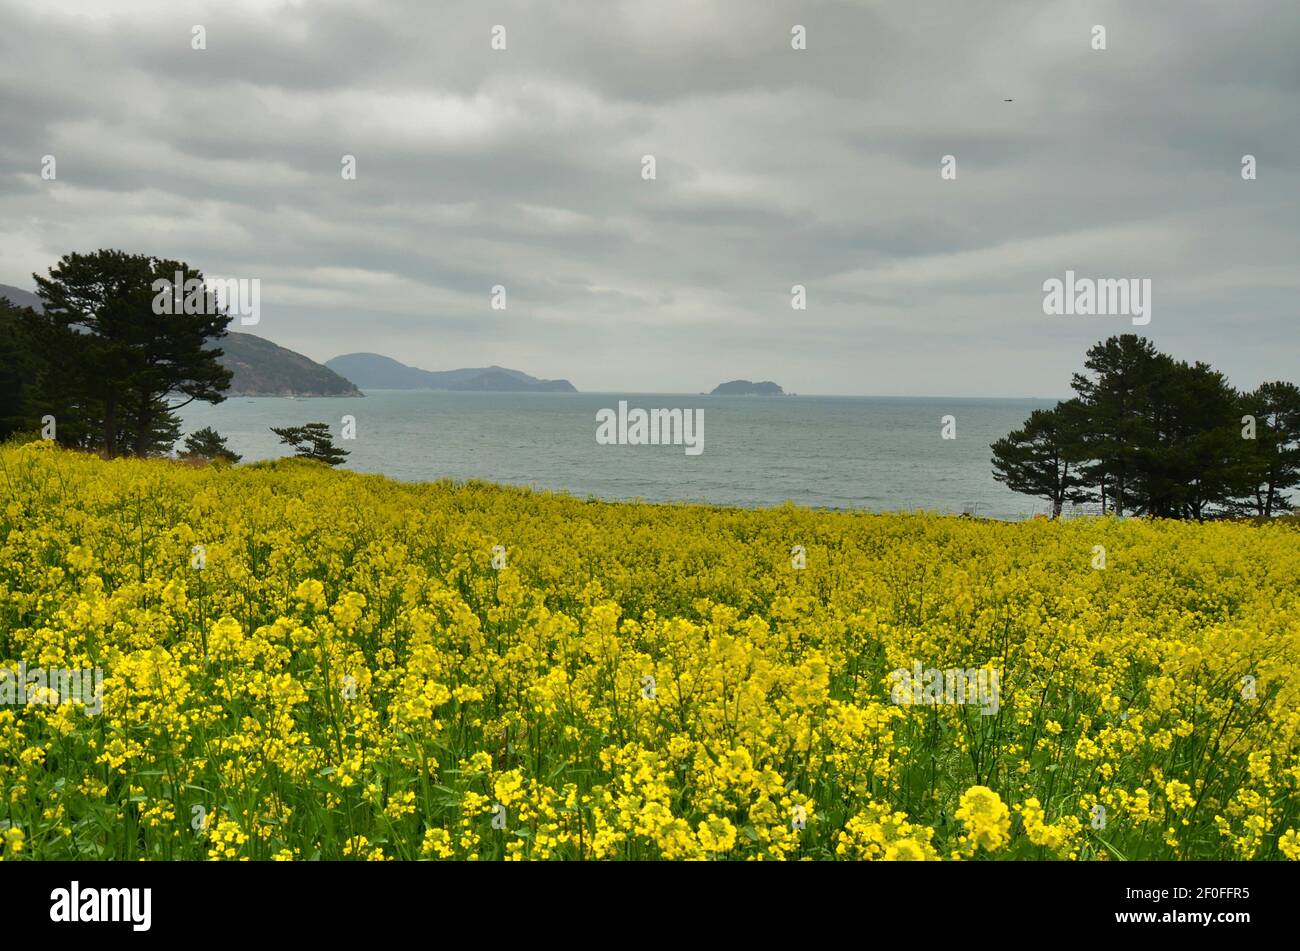 Canola field in Geoje island, Gyeongsang province, South Korea Stock Photo